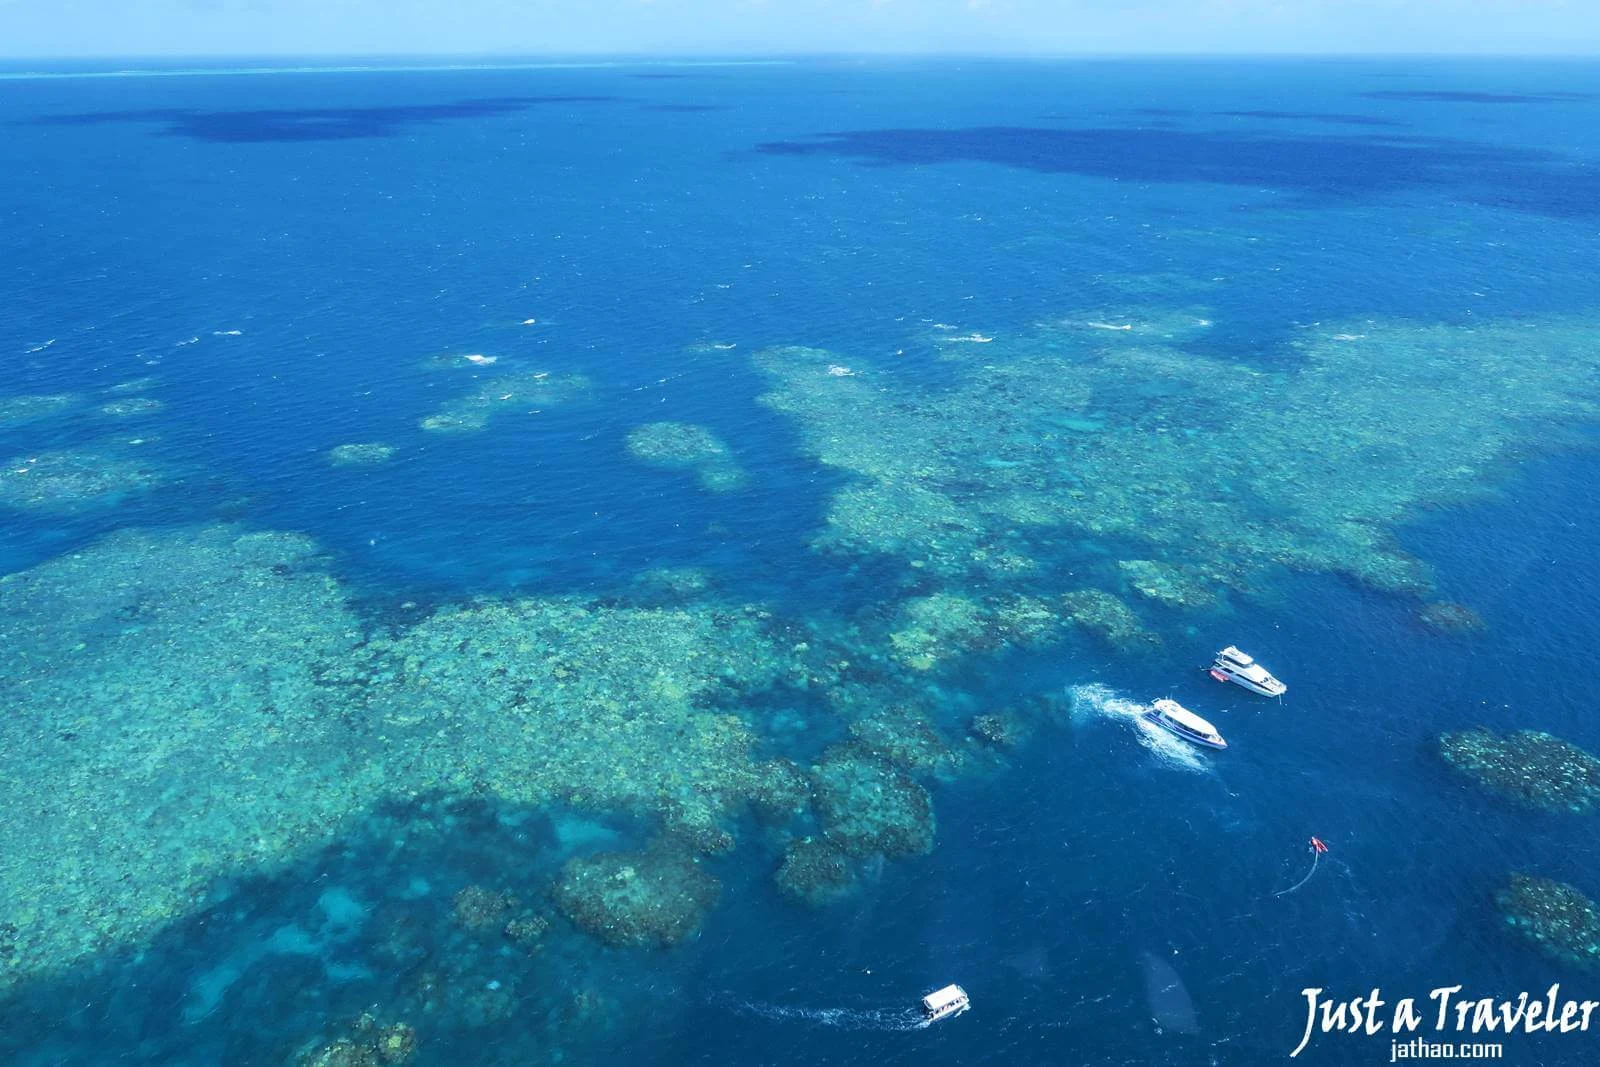 澳洲-凱恩斯-景點-交通-遊記-推薦-凱恩斯自由行-凱恩斯旅遊-大堡礁-美食-住宿-攻略-Australia-Cairns-Great-Barrier-Reef-Travel-Tourist-Attraction-Food-Transport